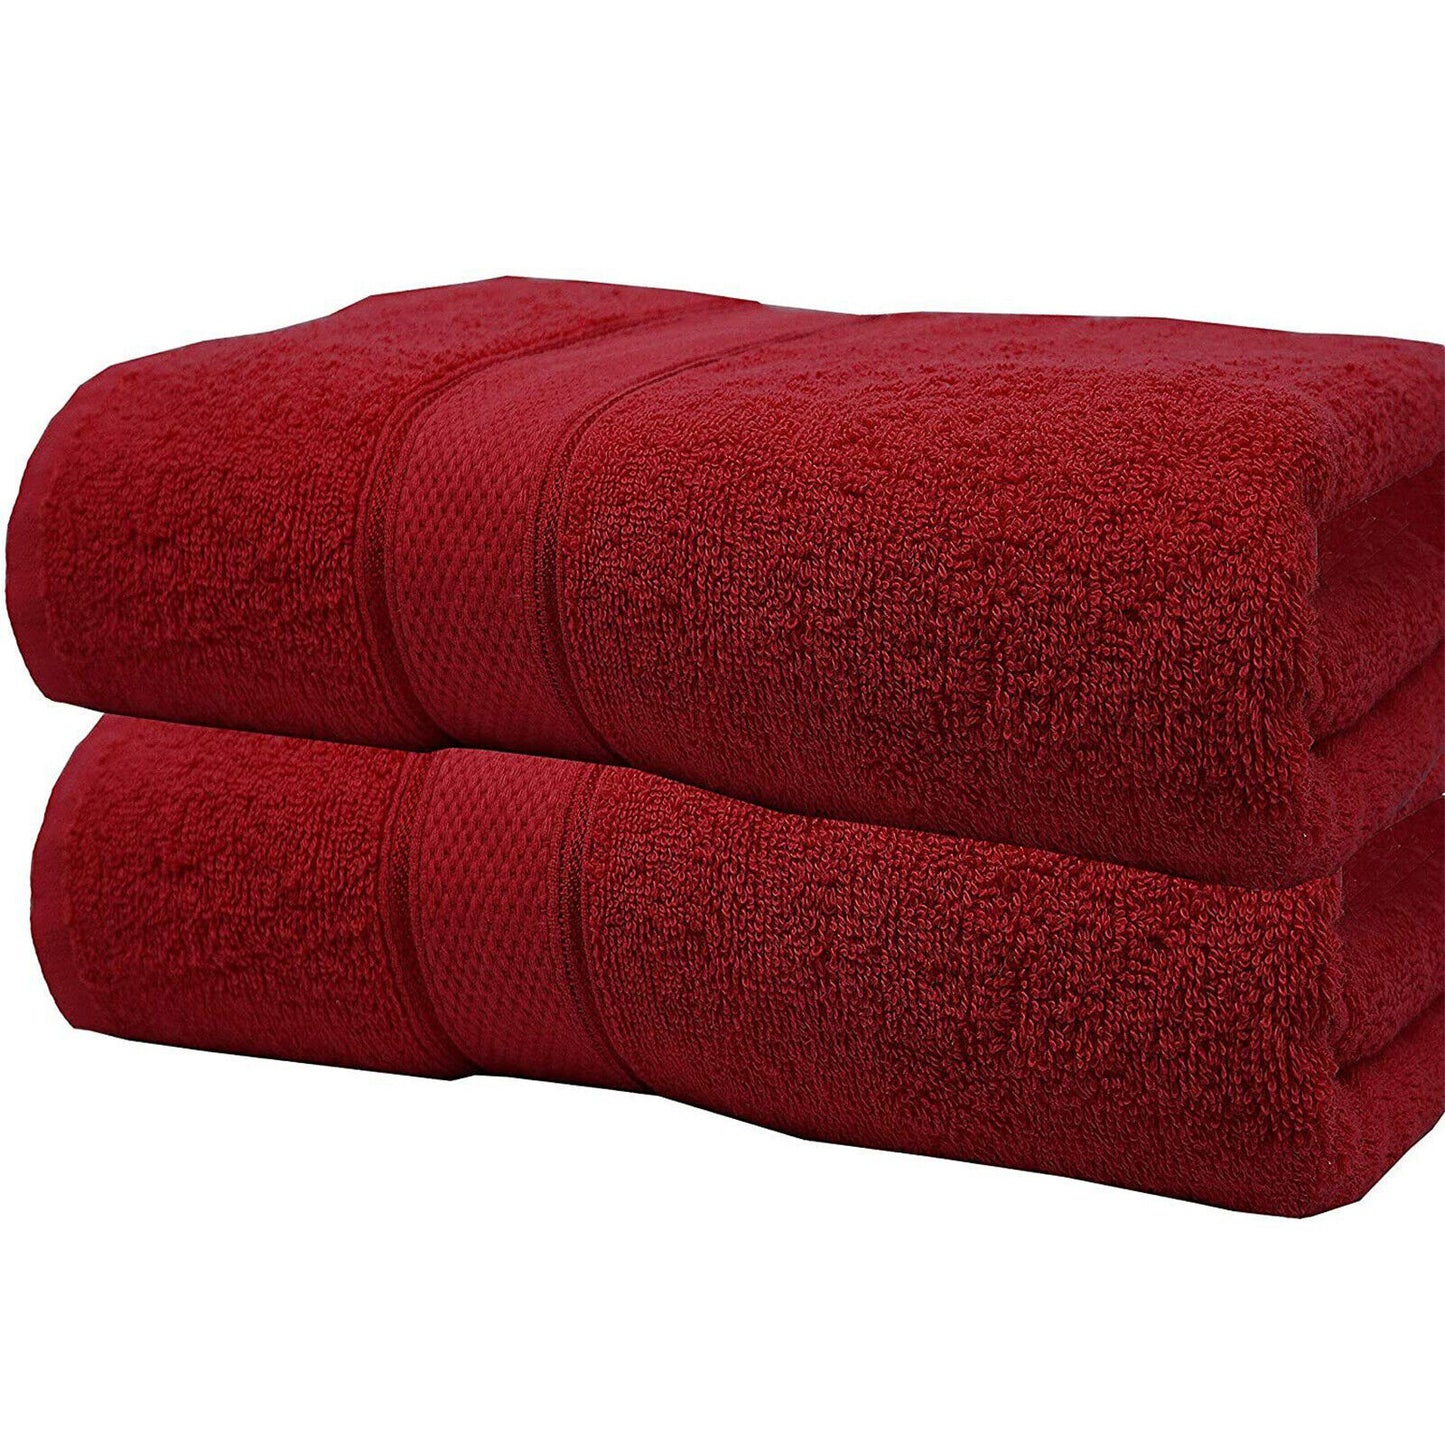 2x Extra Large Super Jumbo Bath Sheets 100% Prime Egyptian Cotton Luxury  Towels.